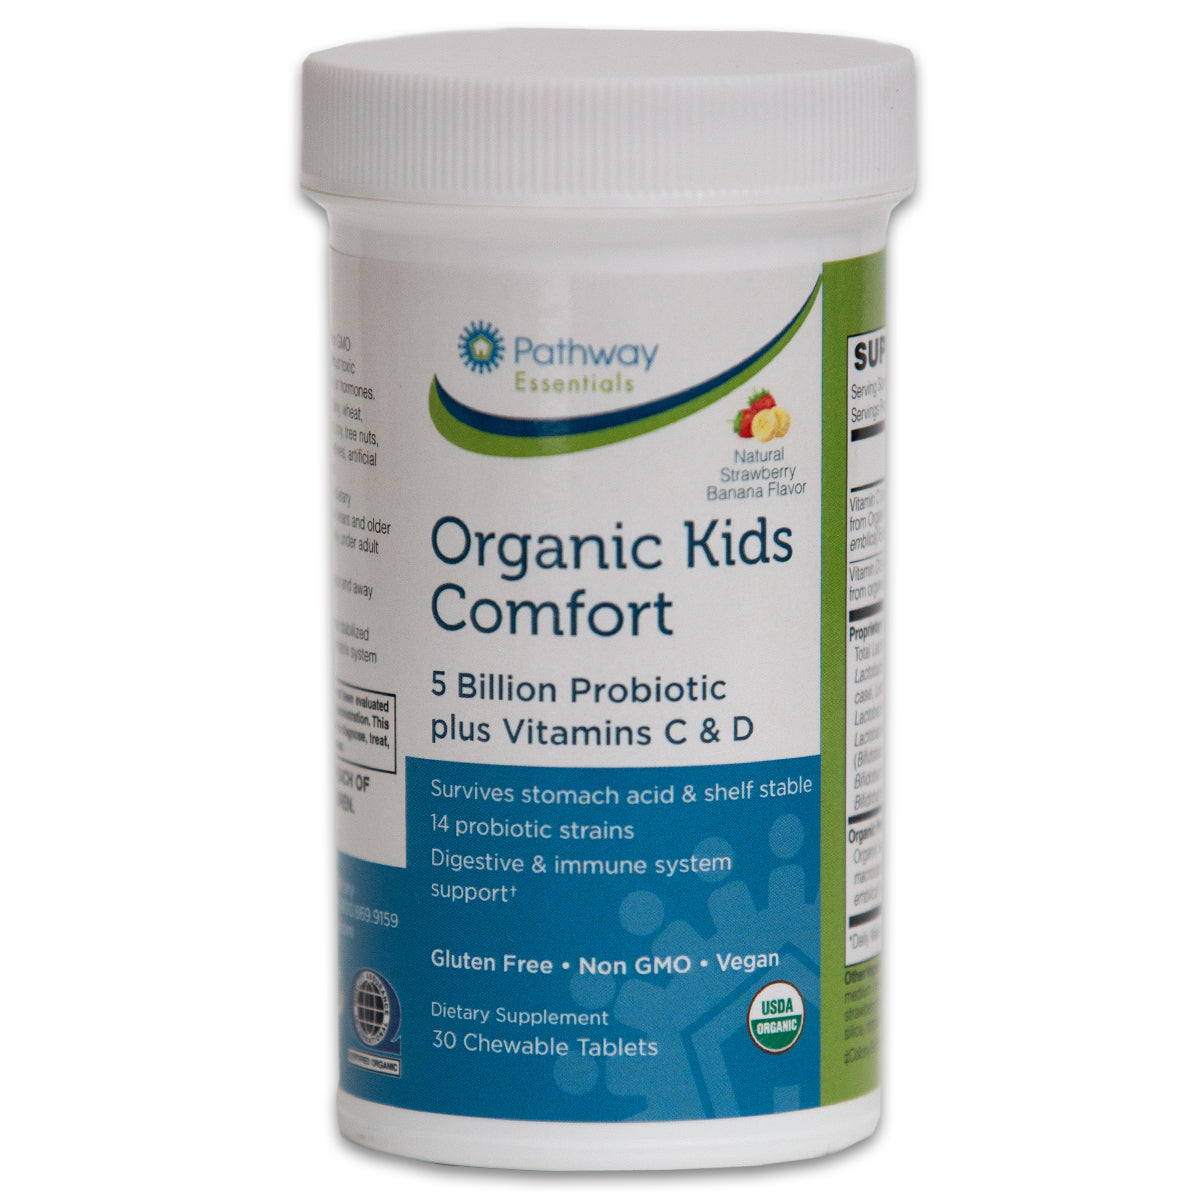 Organic Kids Comfort 5 Billion Probiotic plus Vitamins C & D